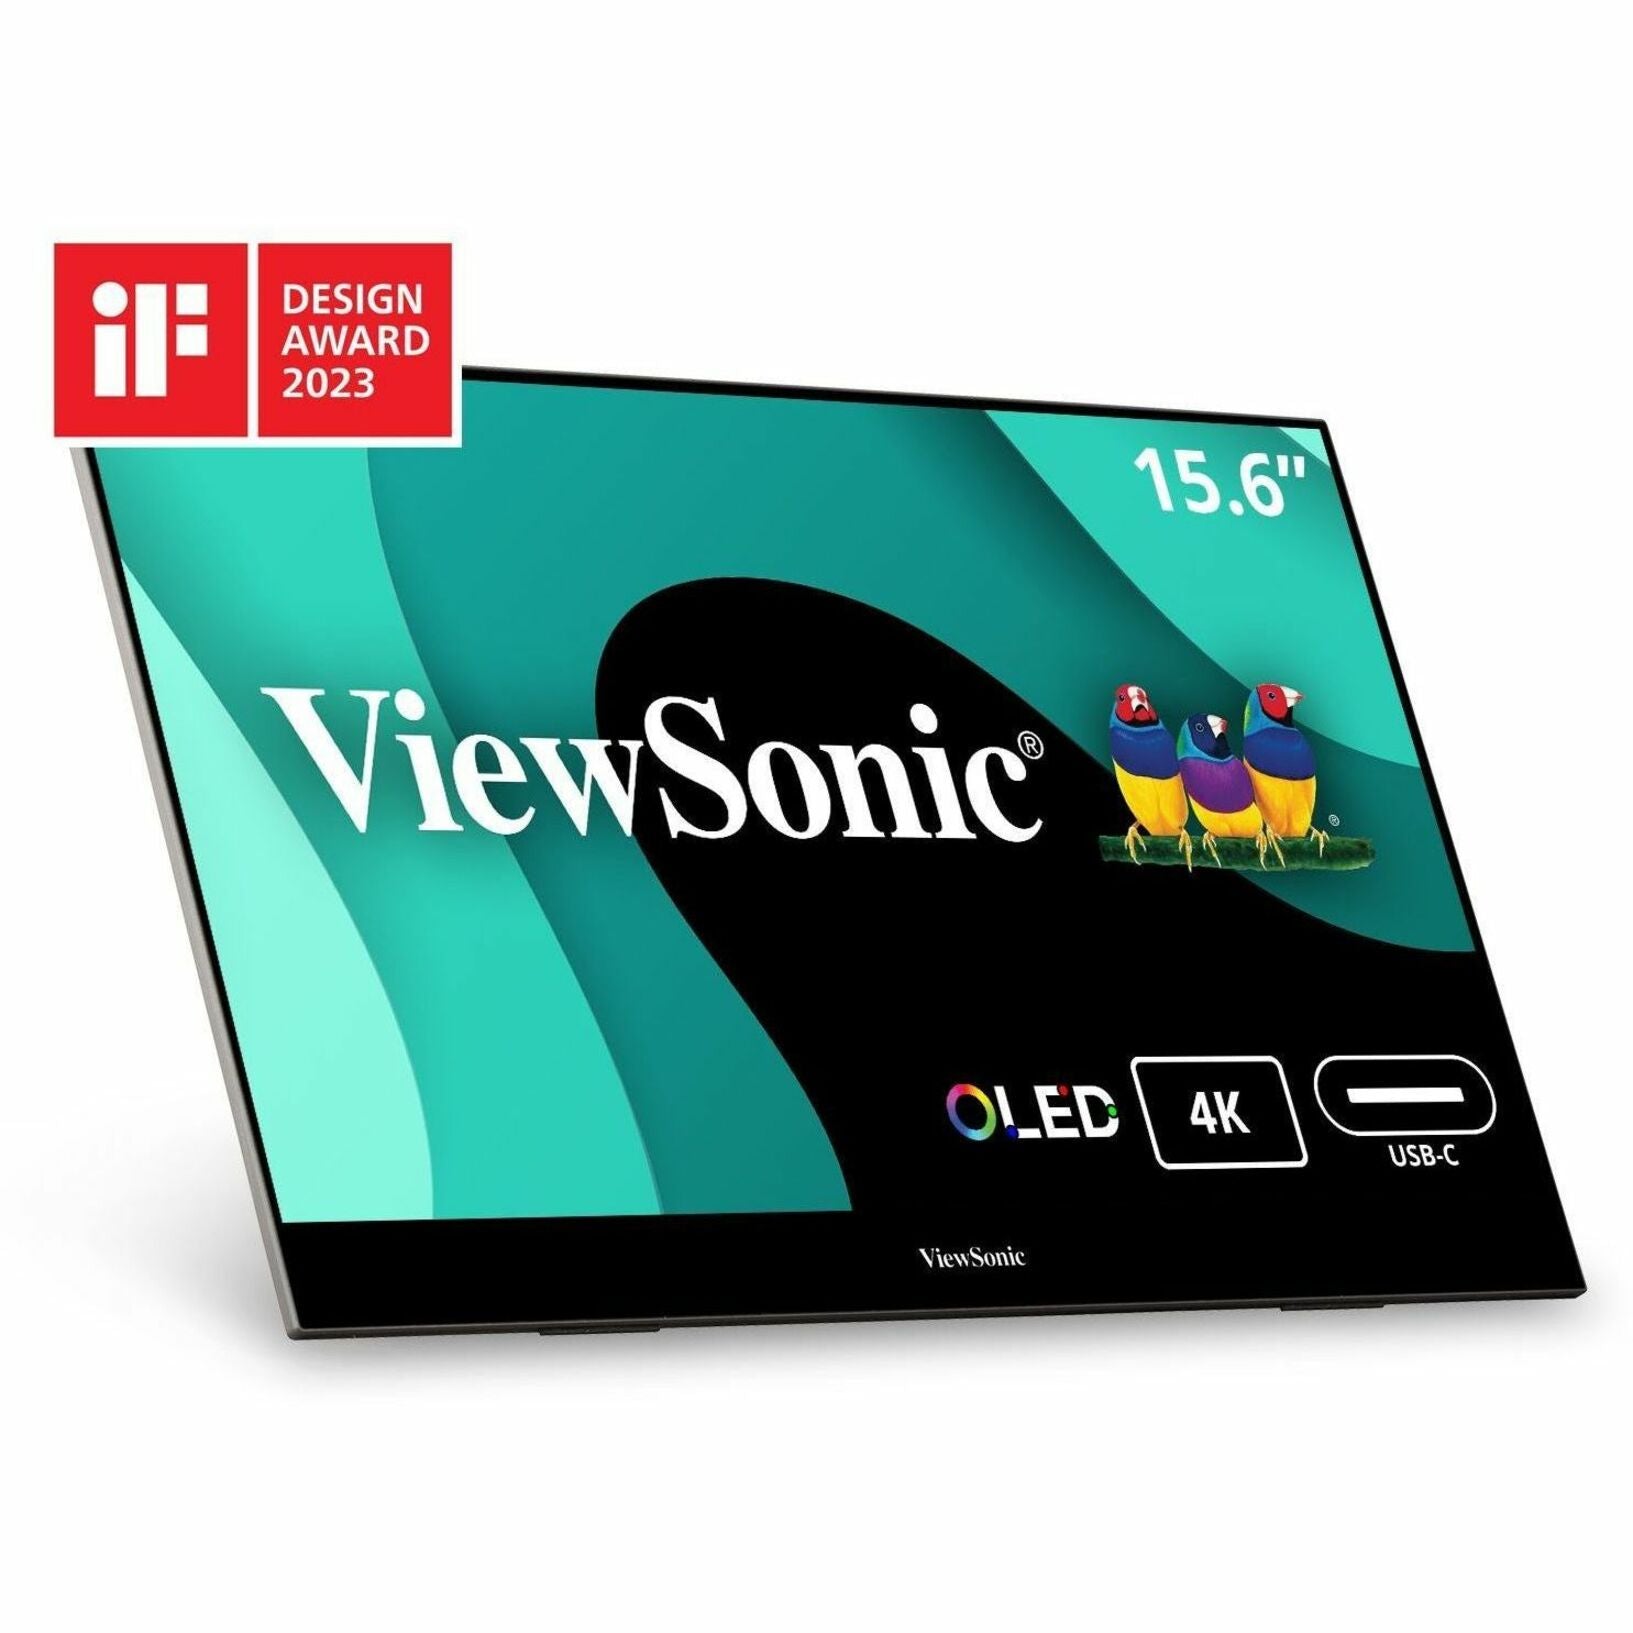 ViewSonic VX1655-4K-OLED 15.6" 4K UHD OLED Monitor - 16:9 - Black